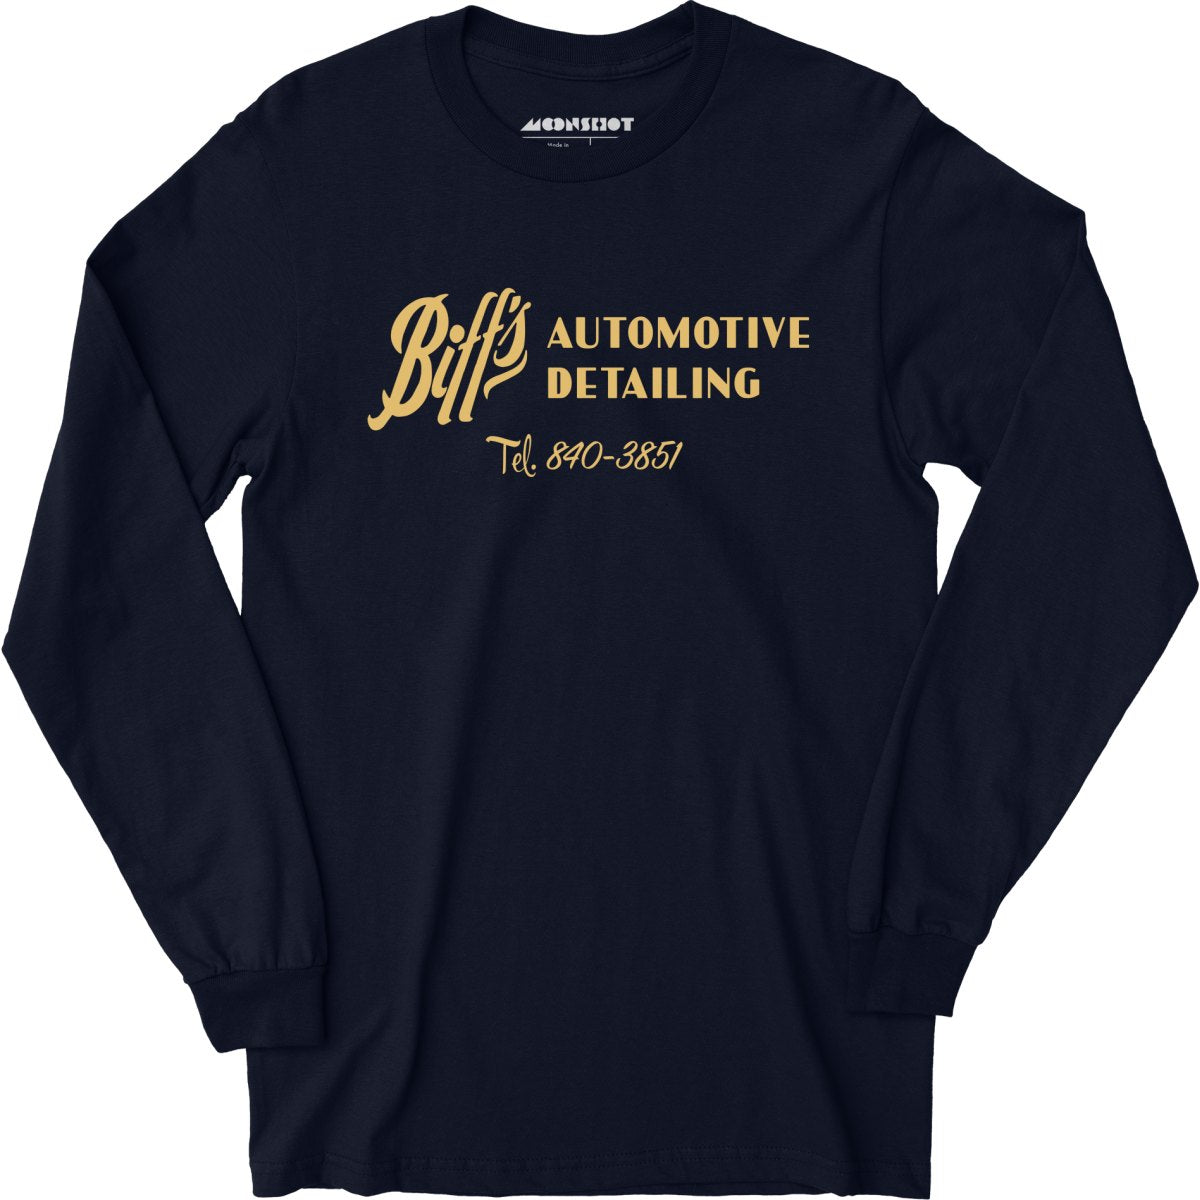 Biff's Automotive Detailing - Long Sleeve T-Shirt